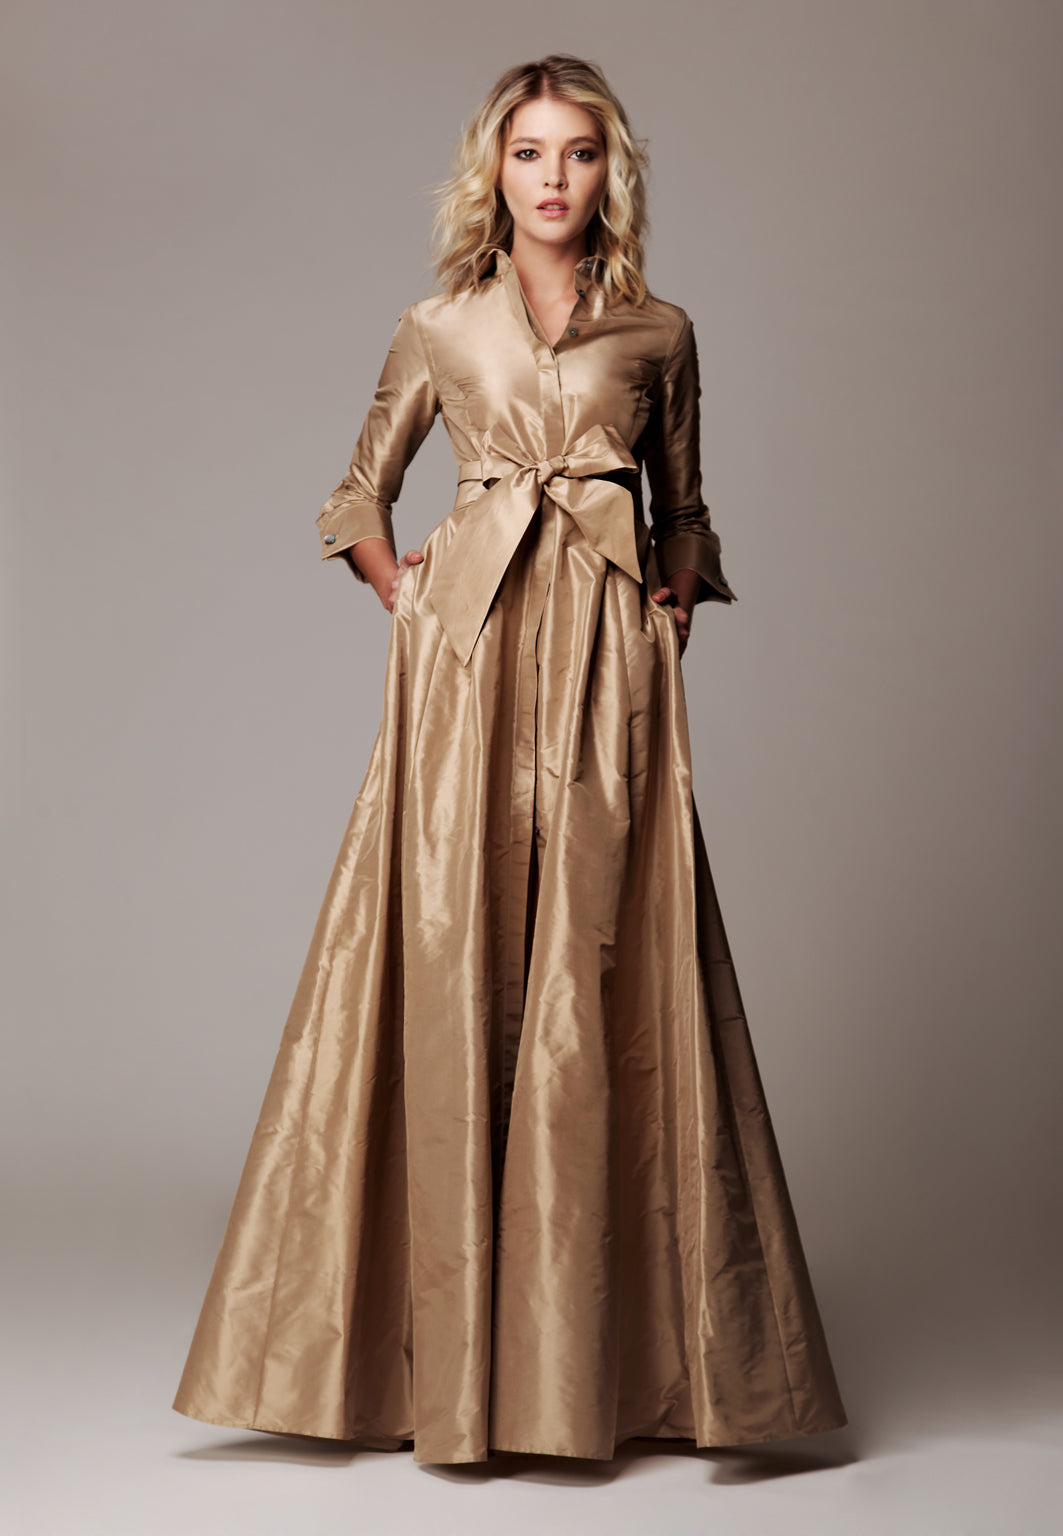 Women's Taffeta Formal Dresses & Evening Gowns | Nordstrom